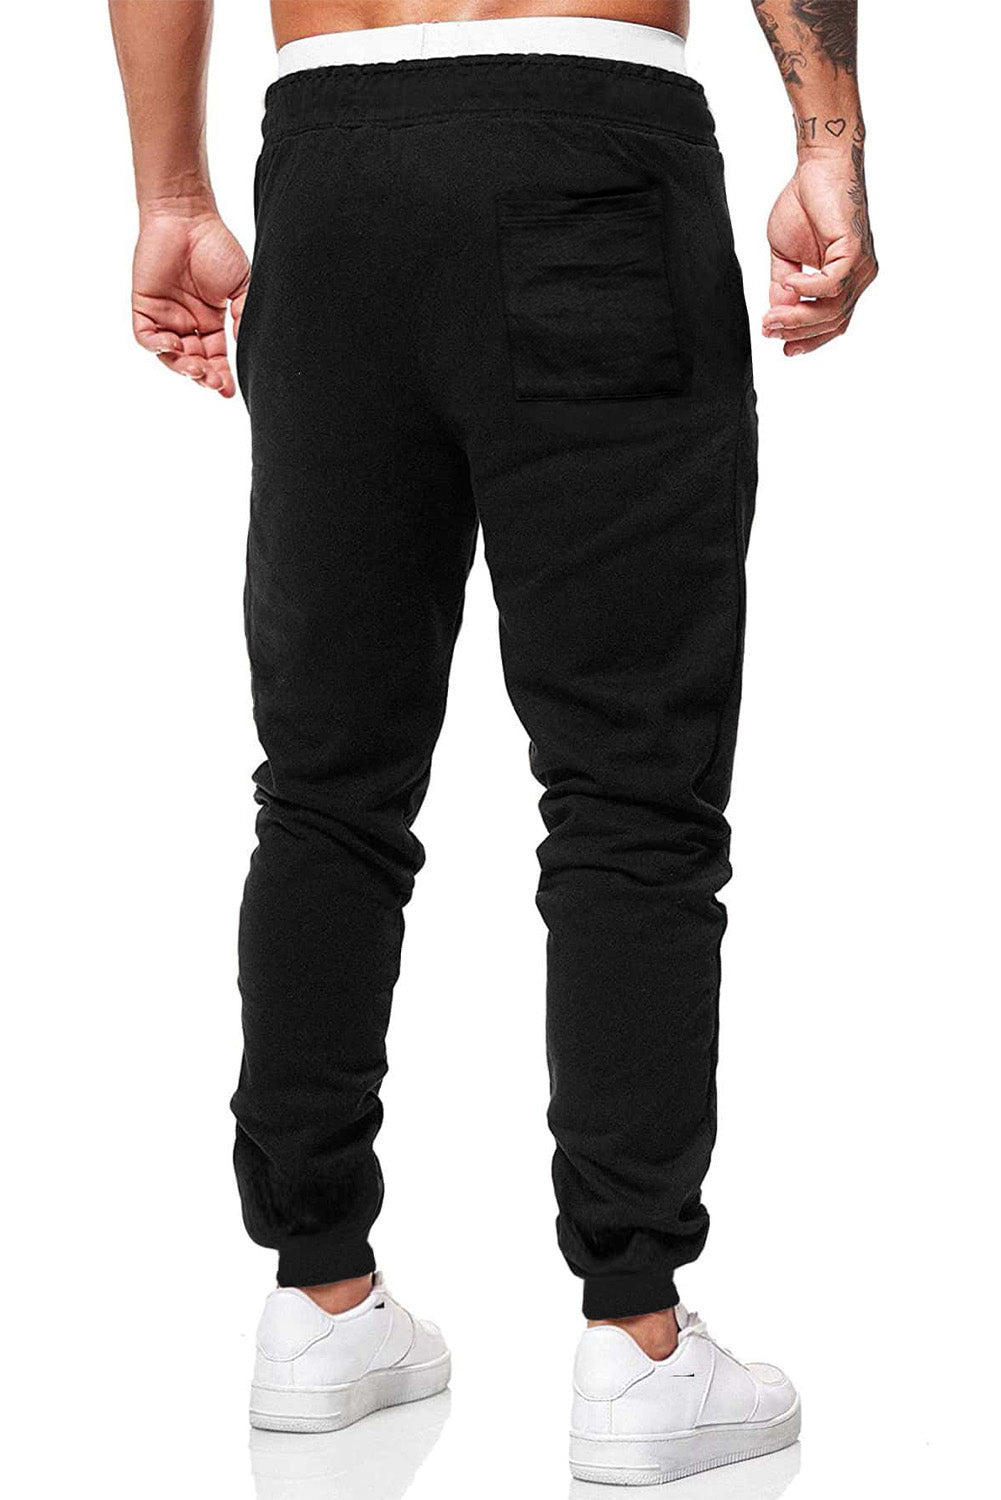 Black IT'S IN MY DNA Graphic Print Men's Jogger Pants Men's Pants JT's Designer Fashion